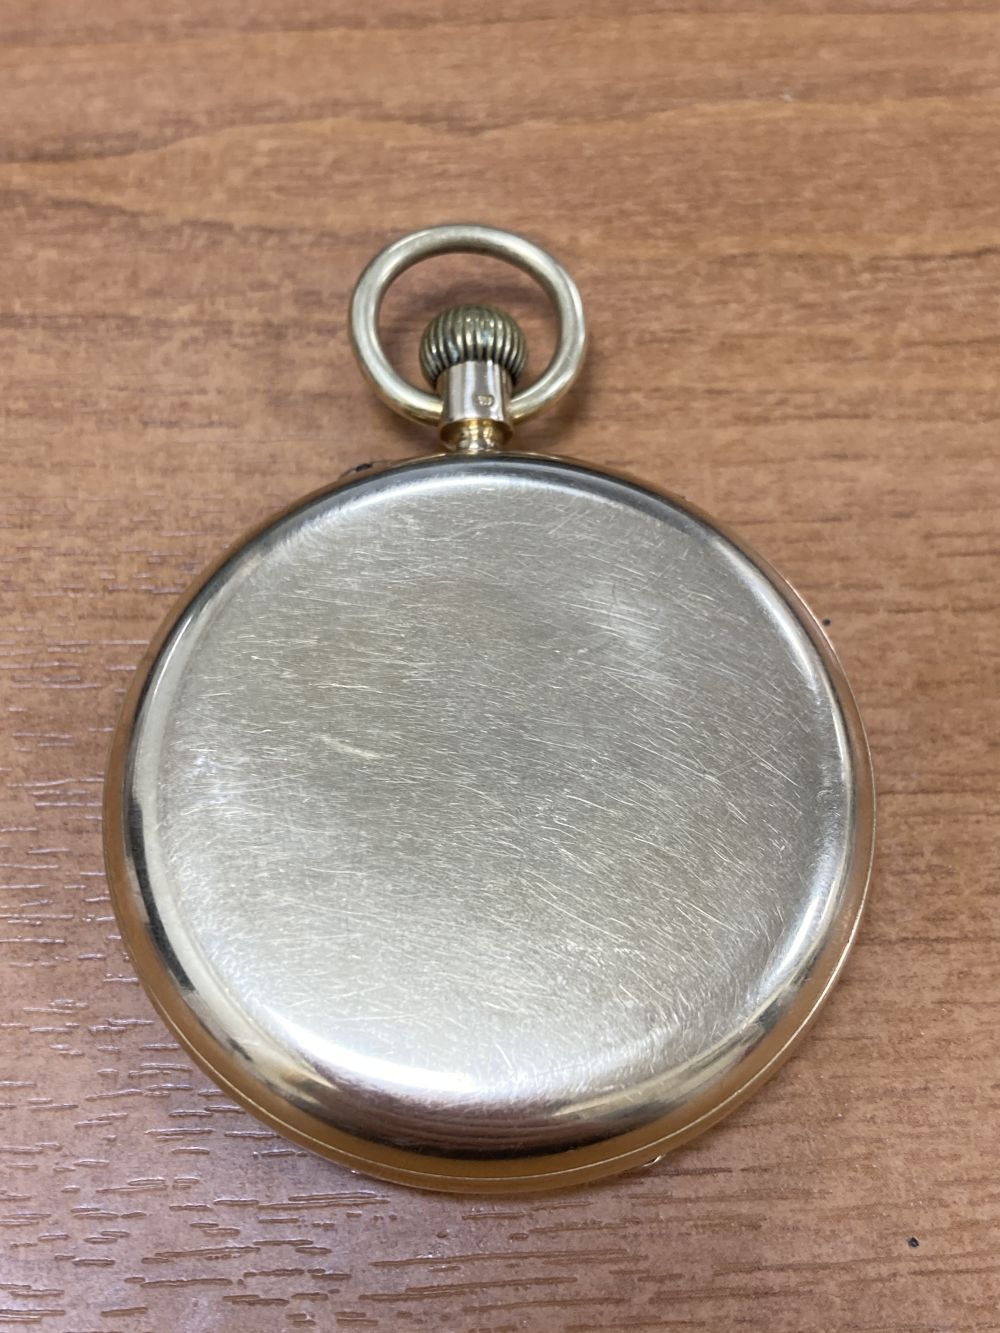 An 18ct gold open face keyless pocket watch, circa 1900, Thomas Russell & Son, No. 94430,